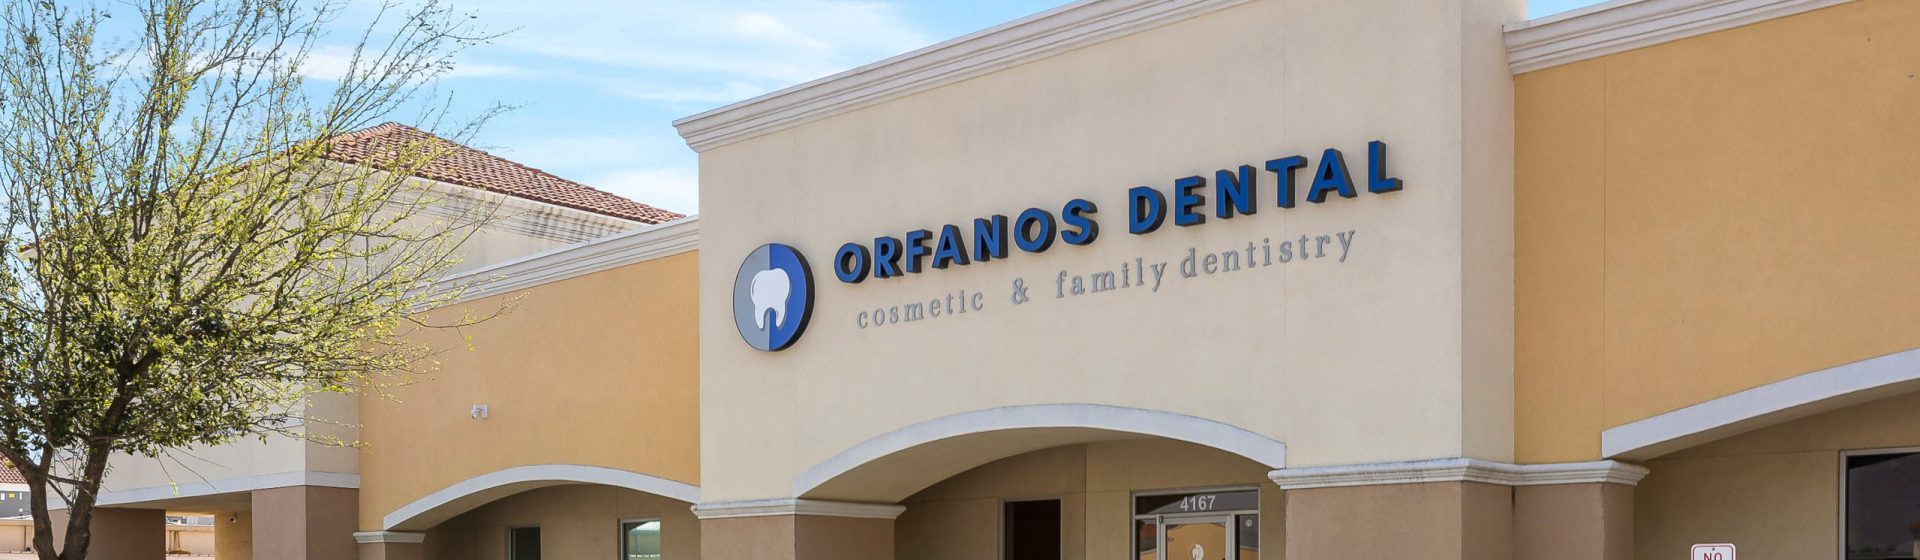 Orfanos Dental